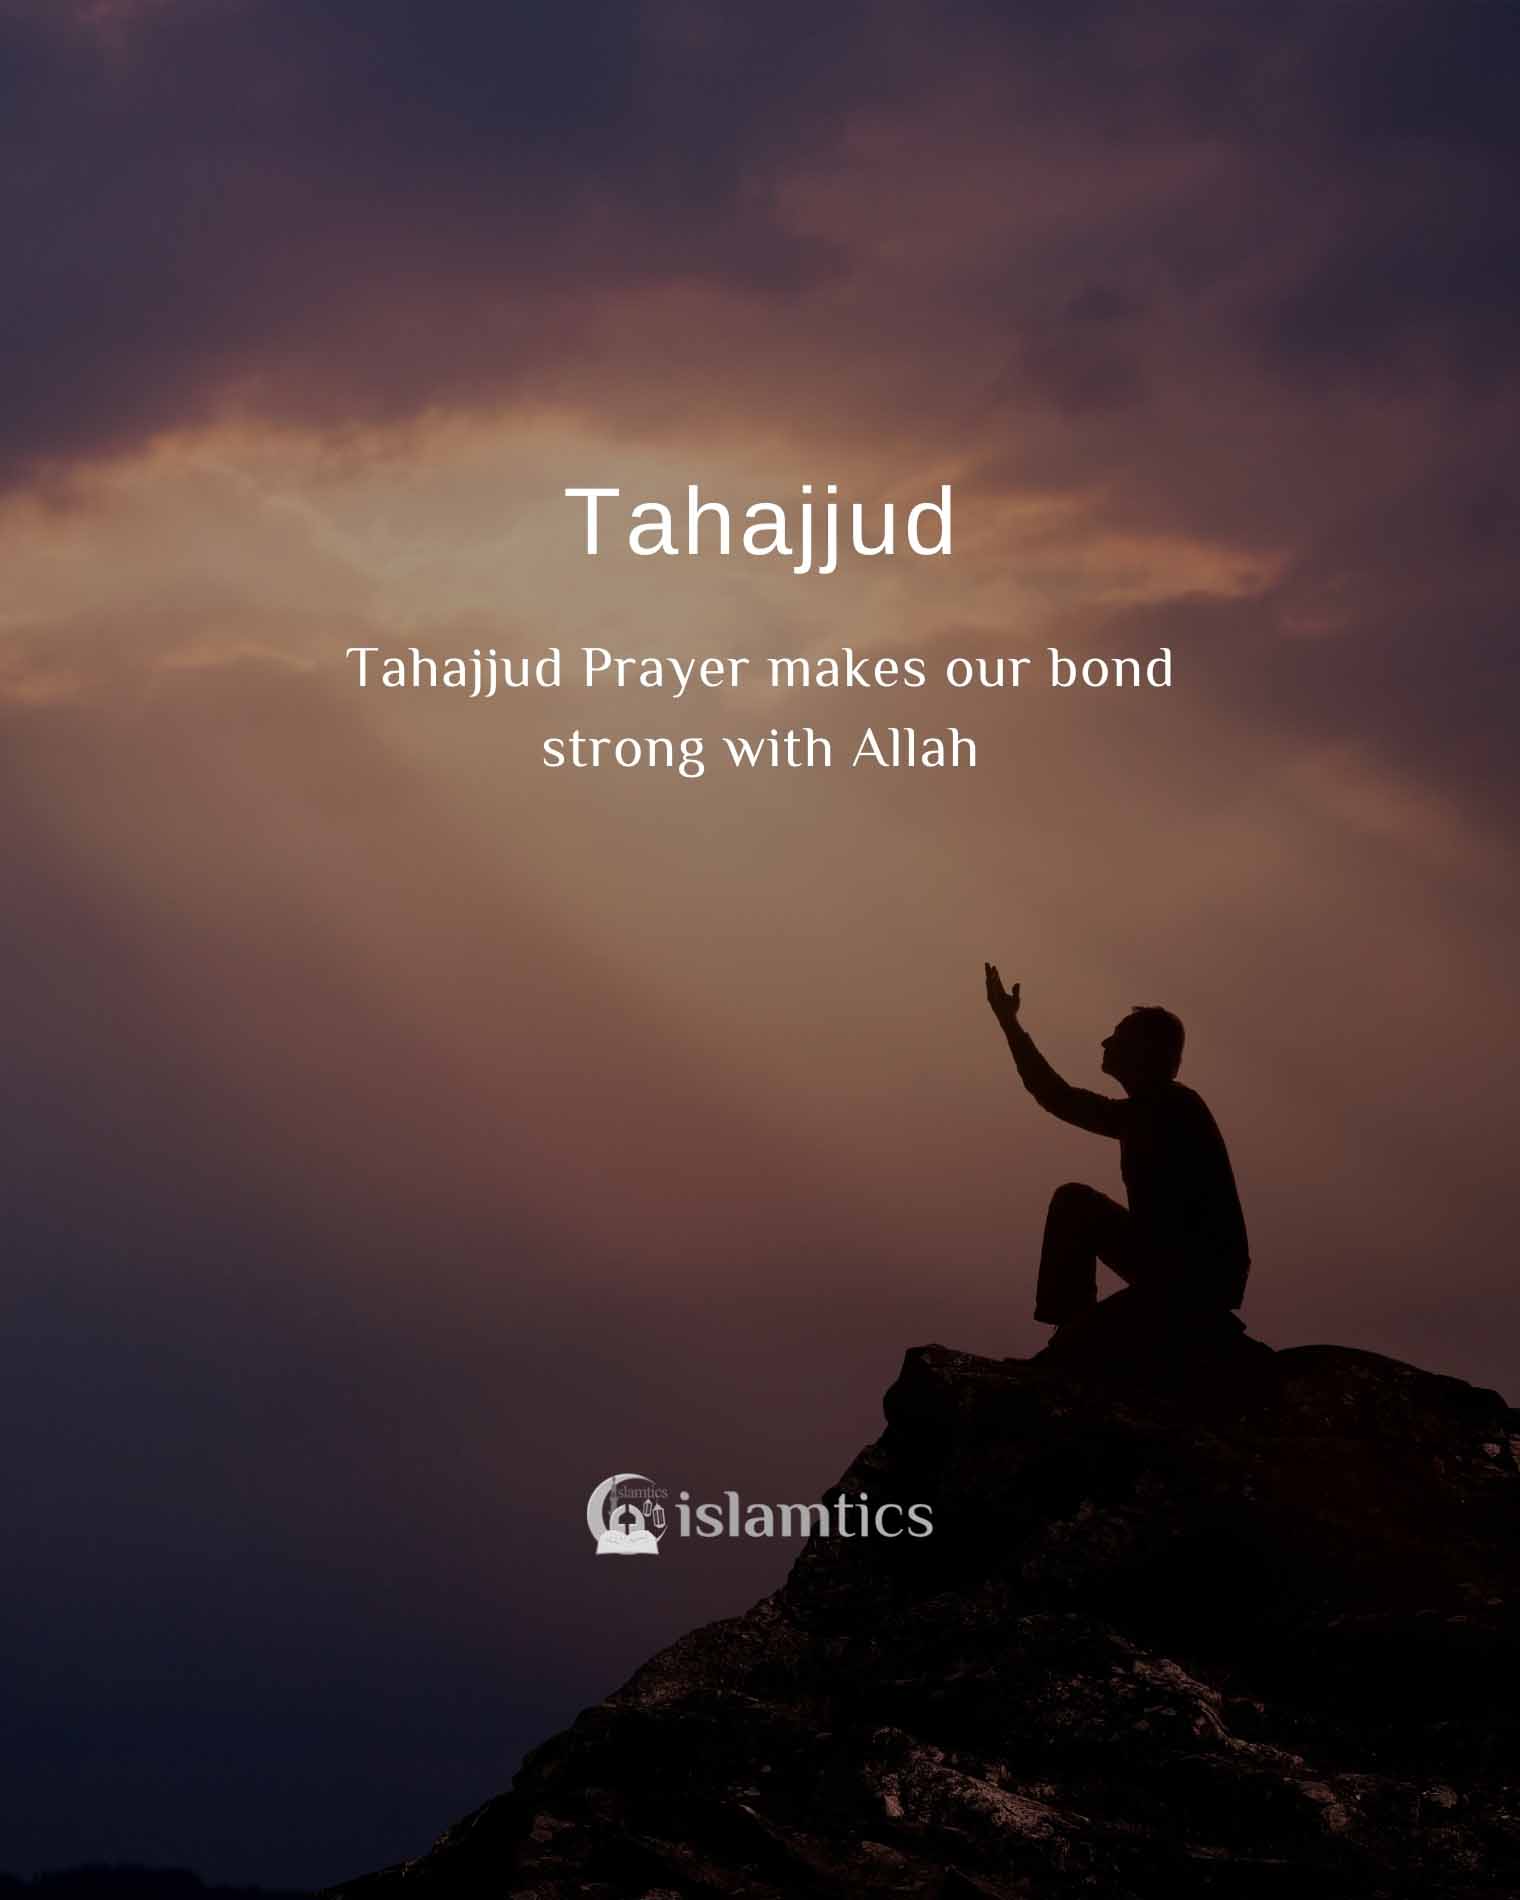 Tahajjud Prayer makes our bond strong with Allah